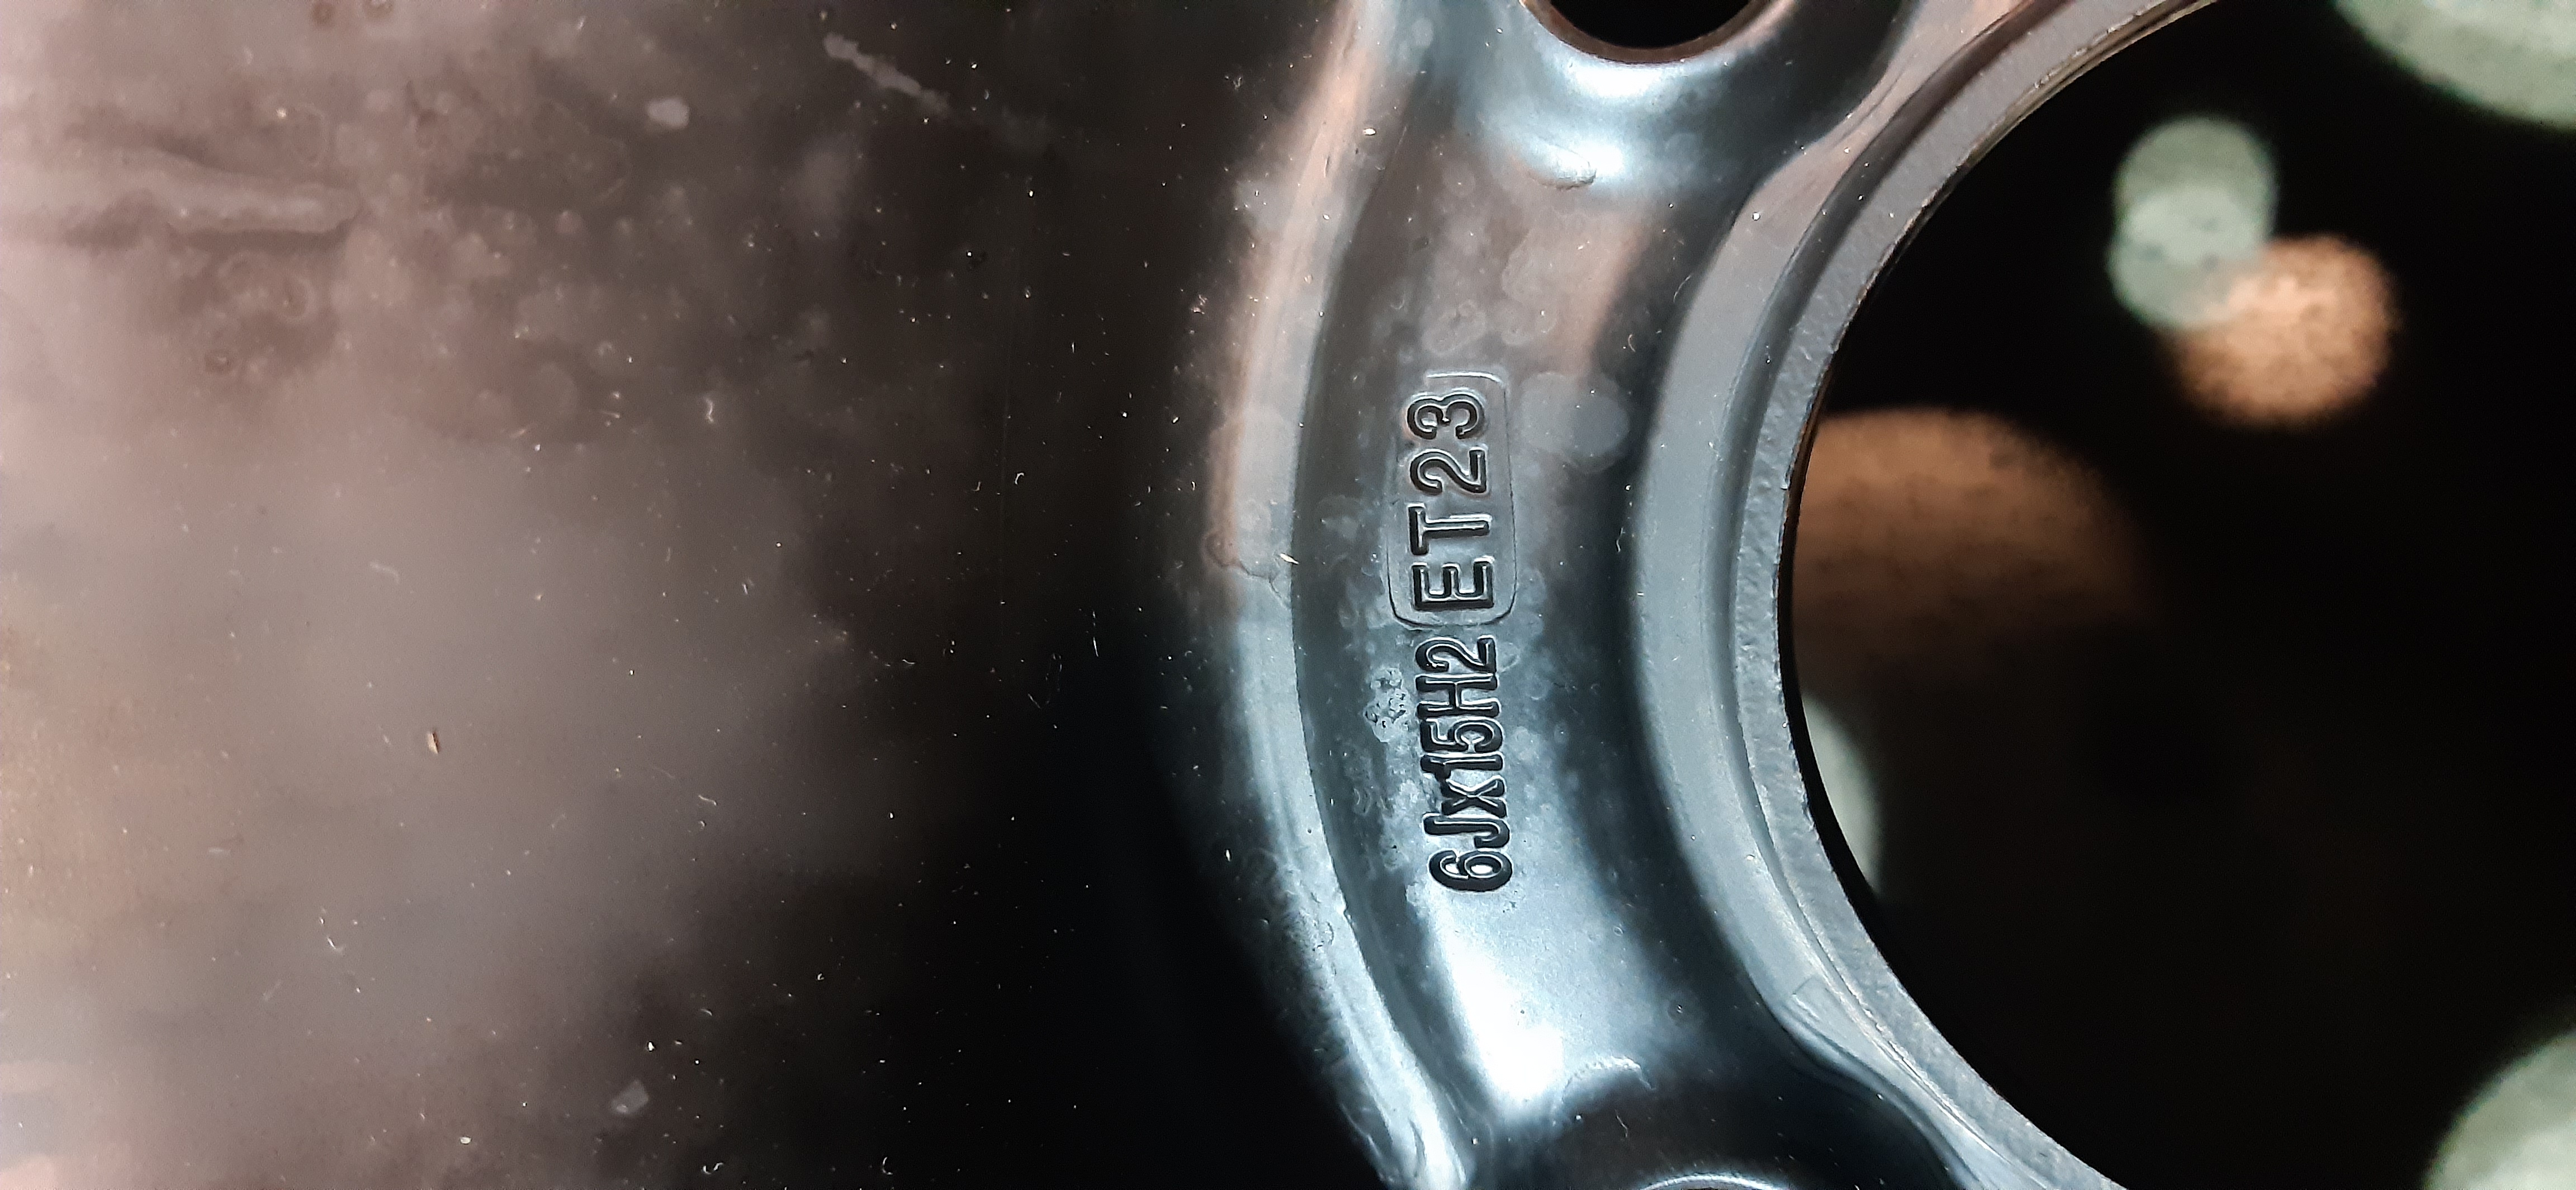 N.4 cerchi in ferro 4 FORI Peugeot 208 2014 6JX15H2 ET23